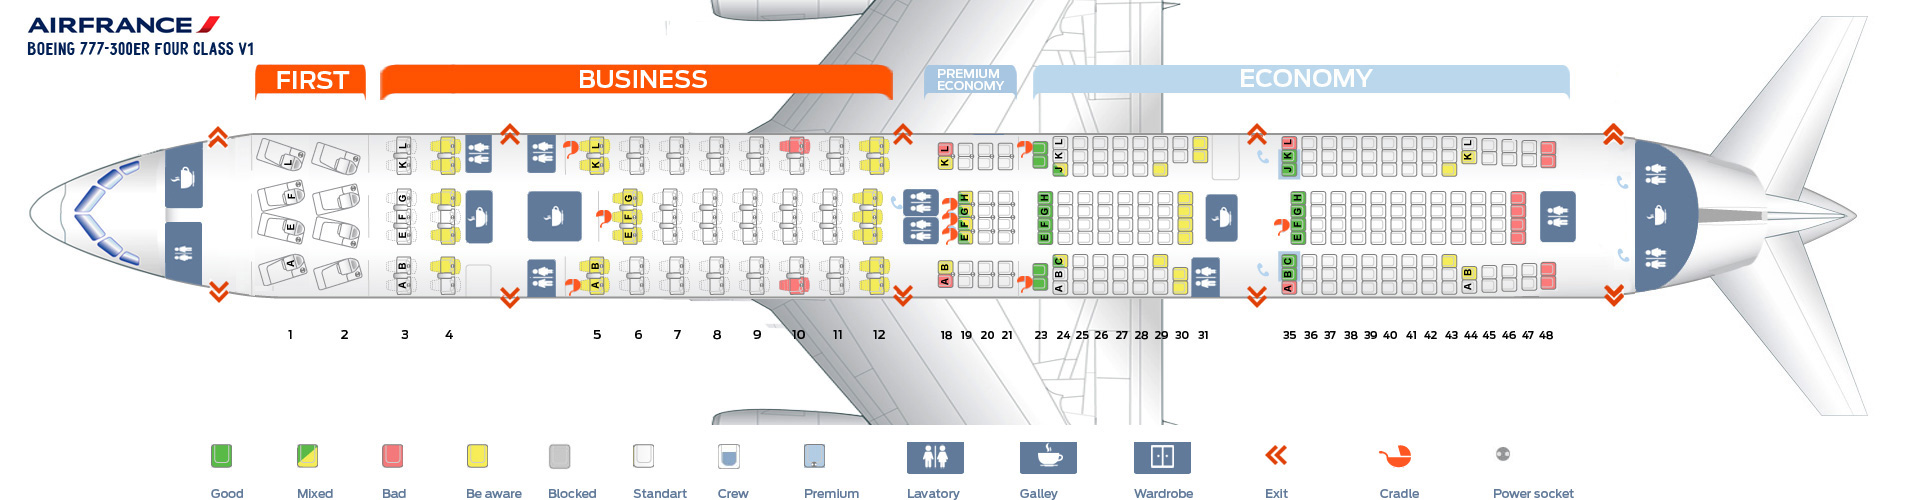 Air France Seating Chart 777